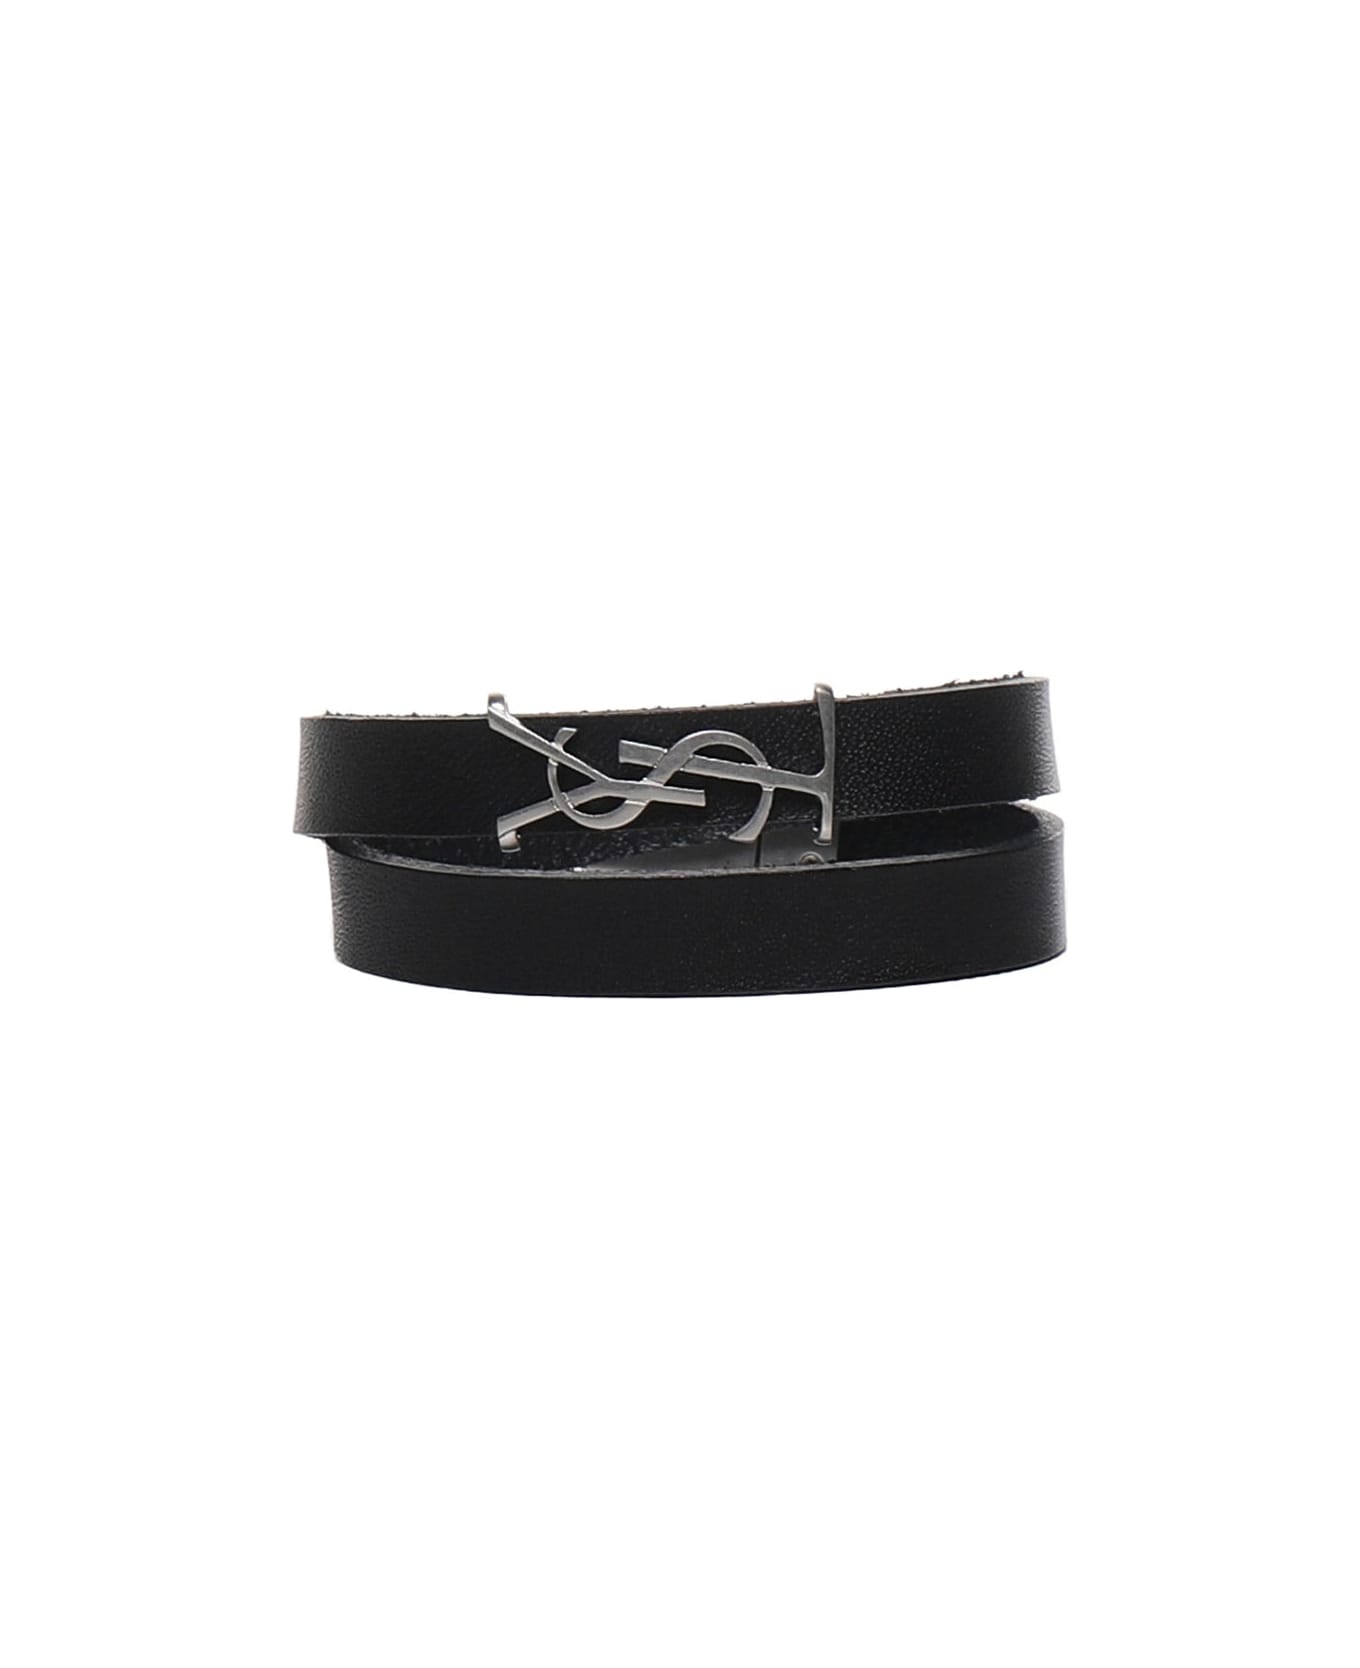 Saint Laurent Leather Ysl Bracelet - Black ブレスレット